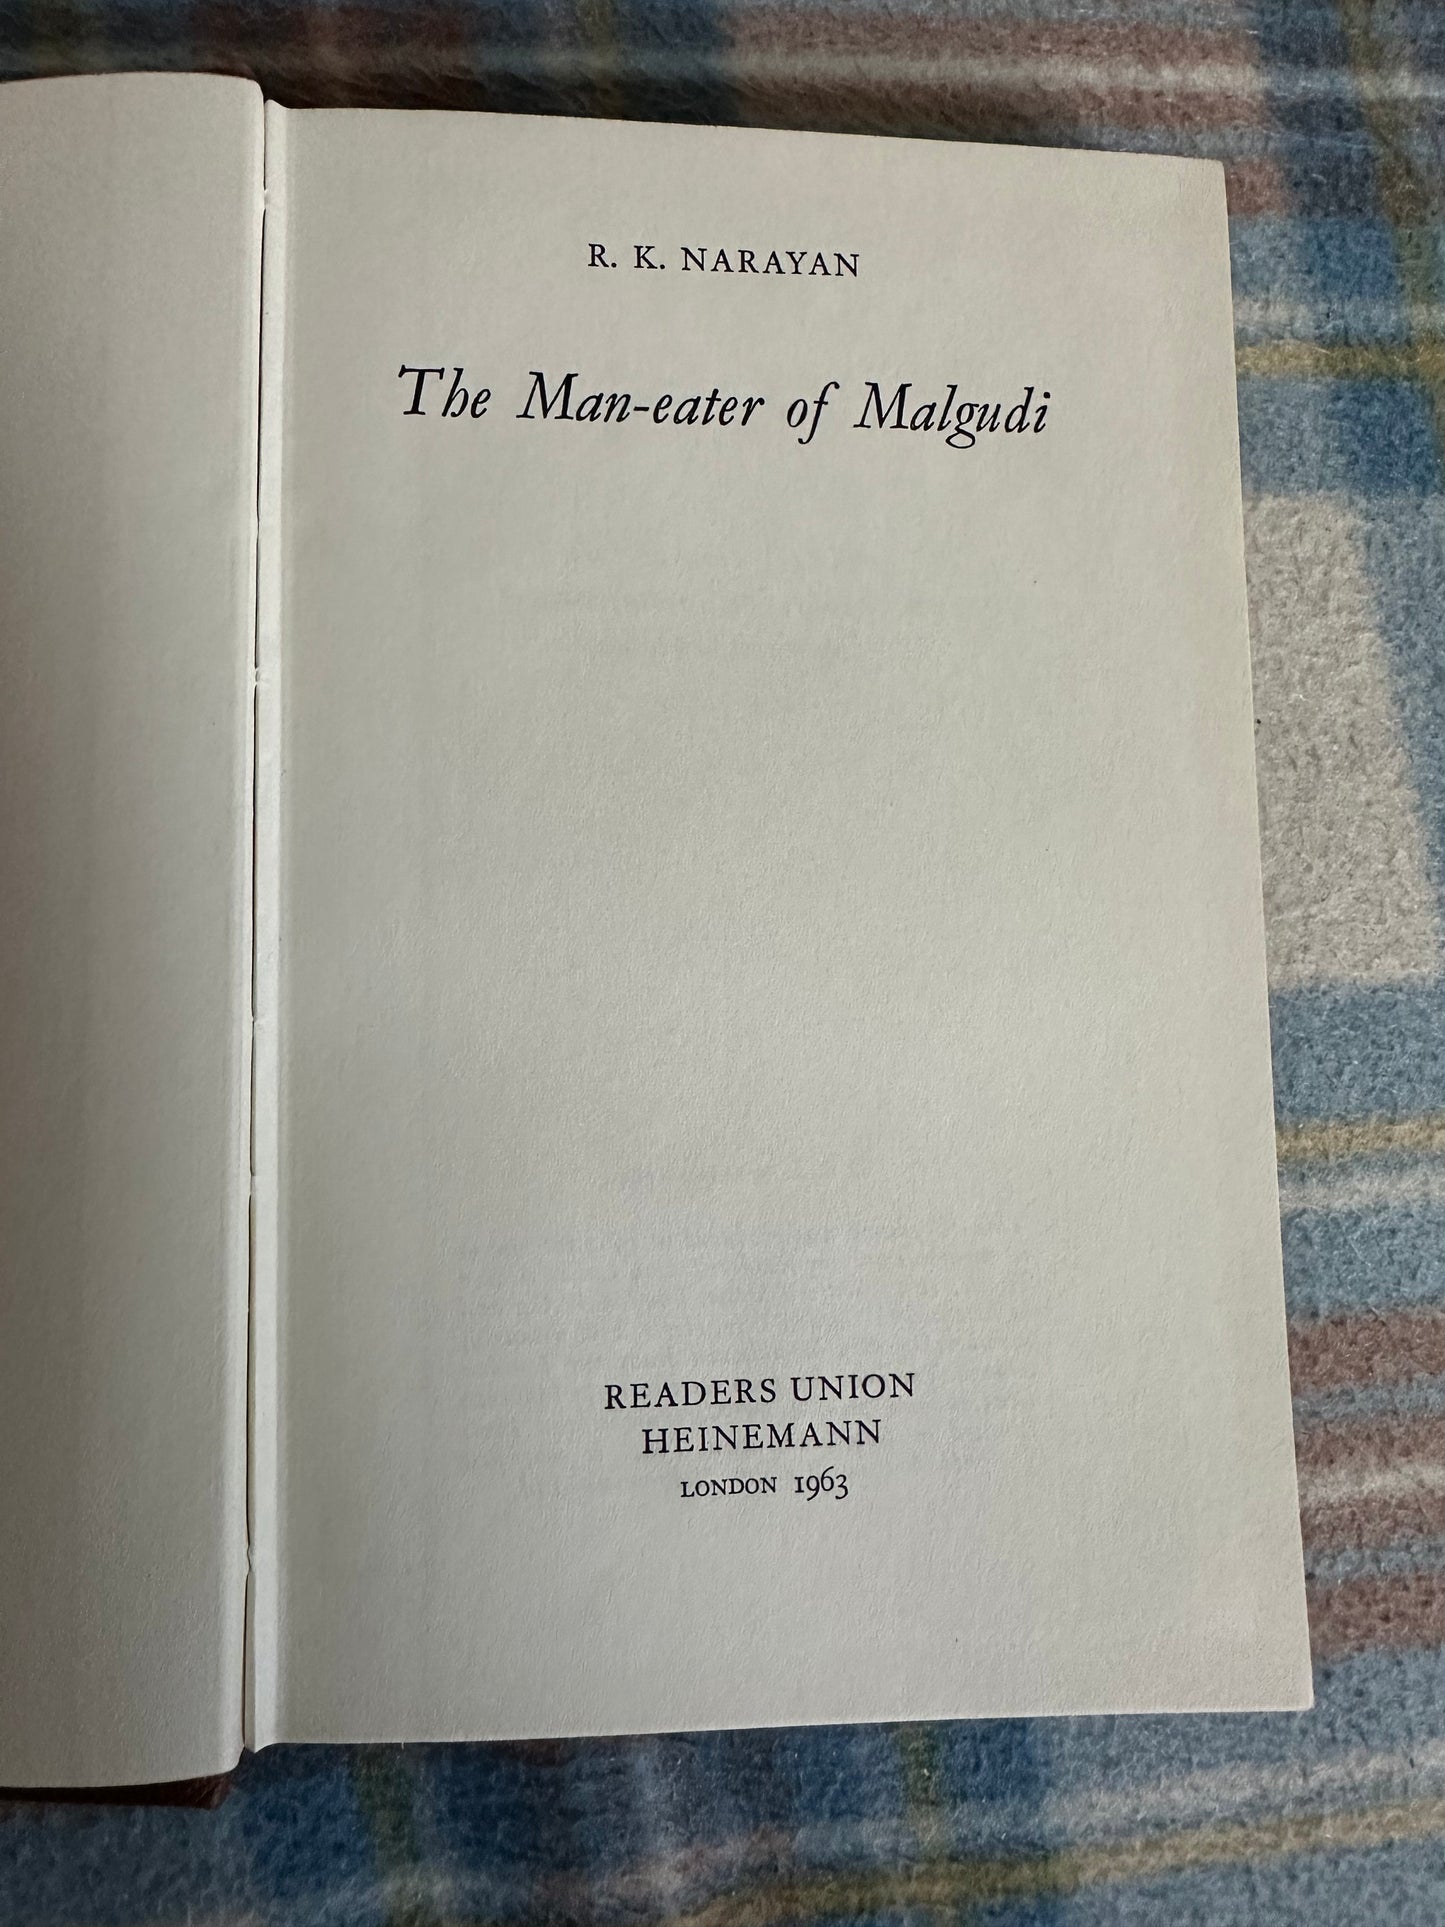 1963 The Man-eater Of Malgudi- R. K. Narayan(Readers Union Heinemann)